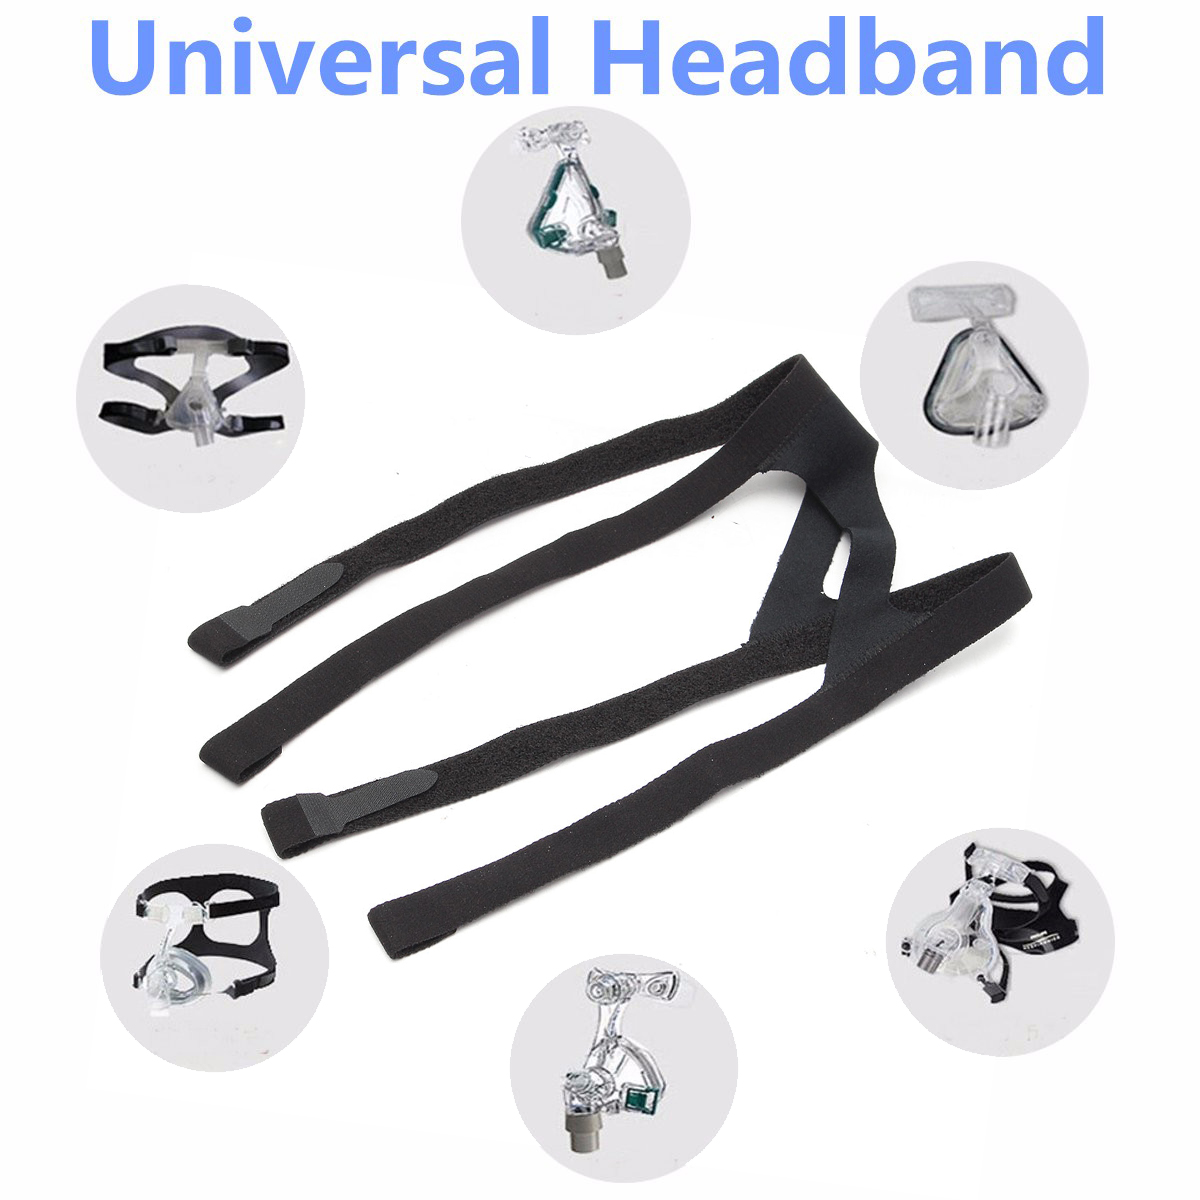 Universal-Headgear-Black-Replacement-Ventilator-Part-Headband-Buckle-Without-Mask-1301298